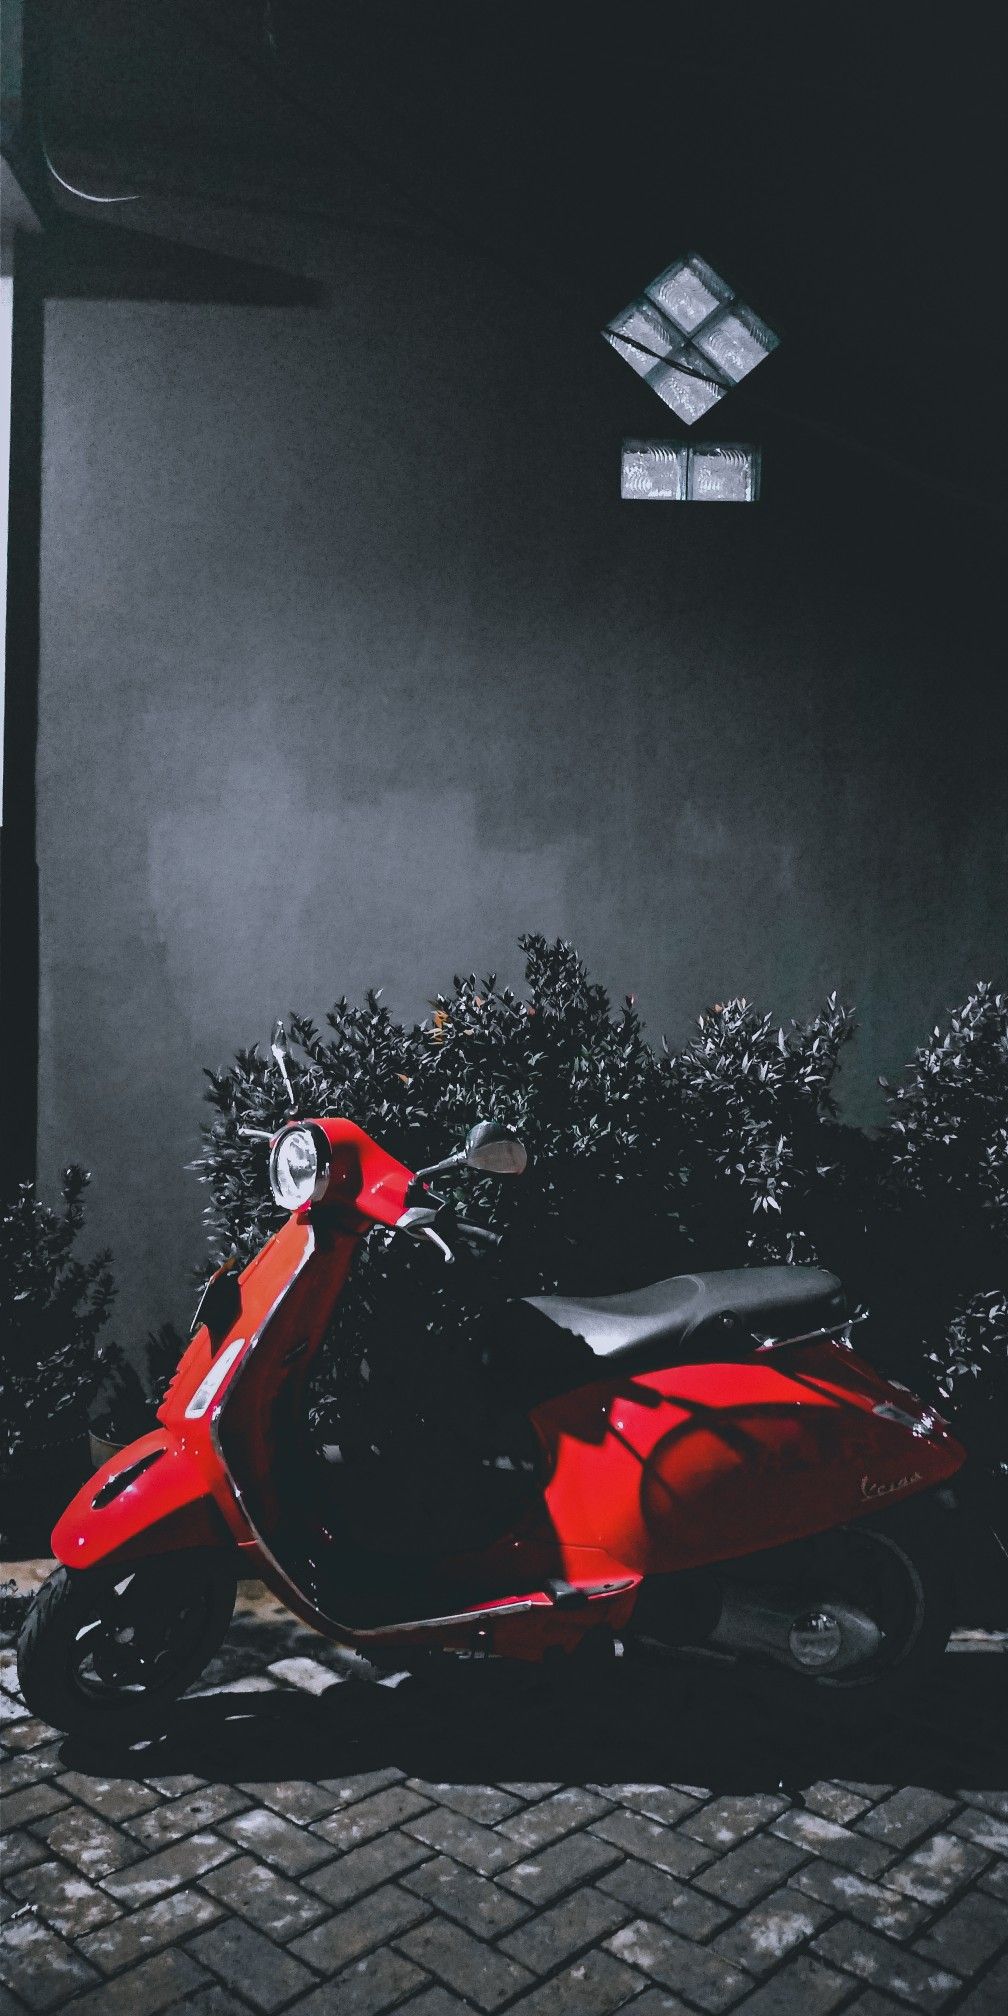  Motor Hintergrundbild 1008x2016. saski on ride. Bike art, Vespa, HD cool wallpaper